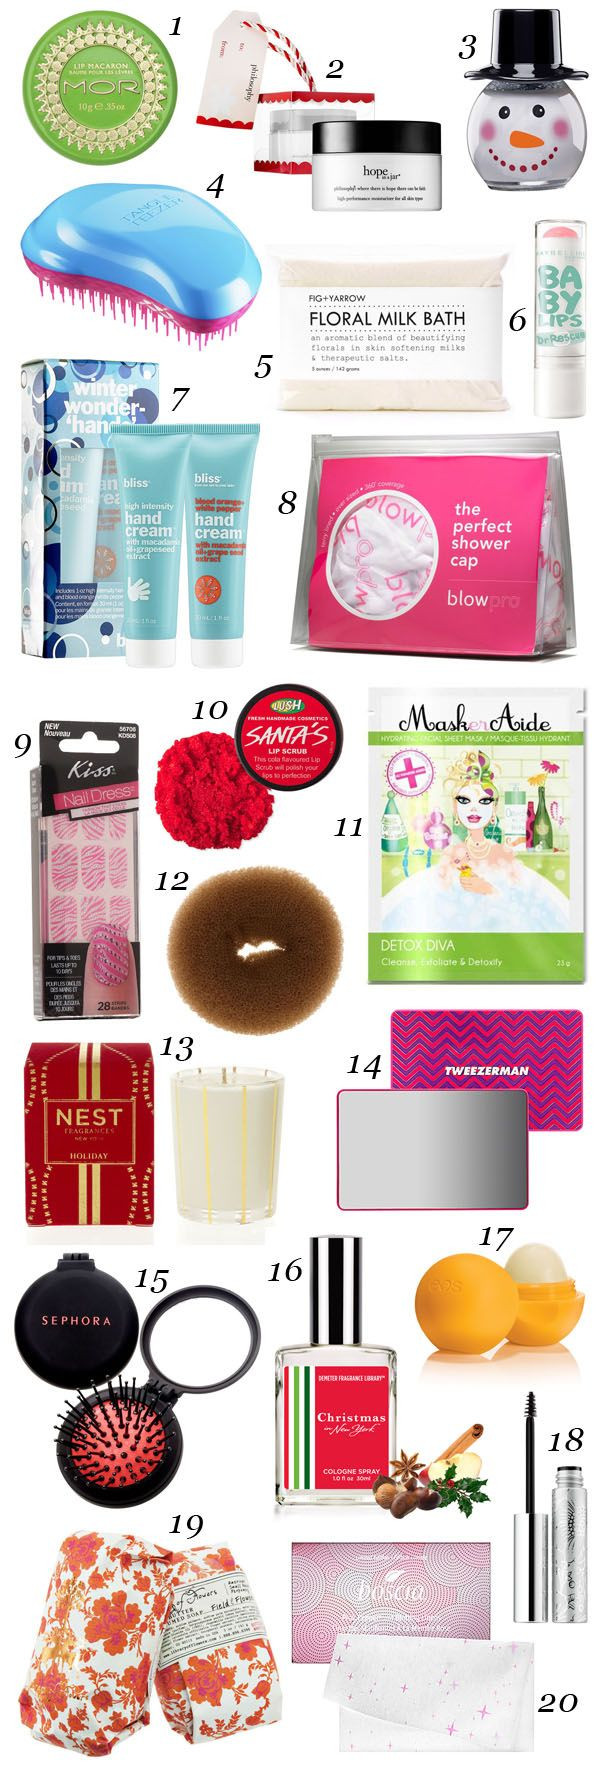 Secret Santa Gift Ideas For Girls
 17 Best images about Stocking Stuffers & Secret Santa